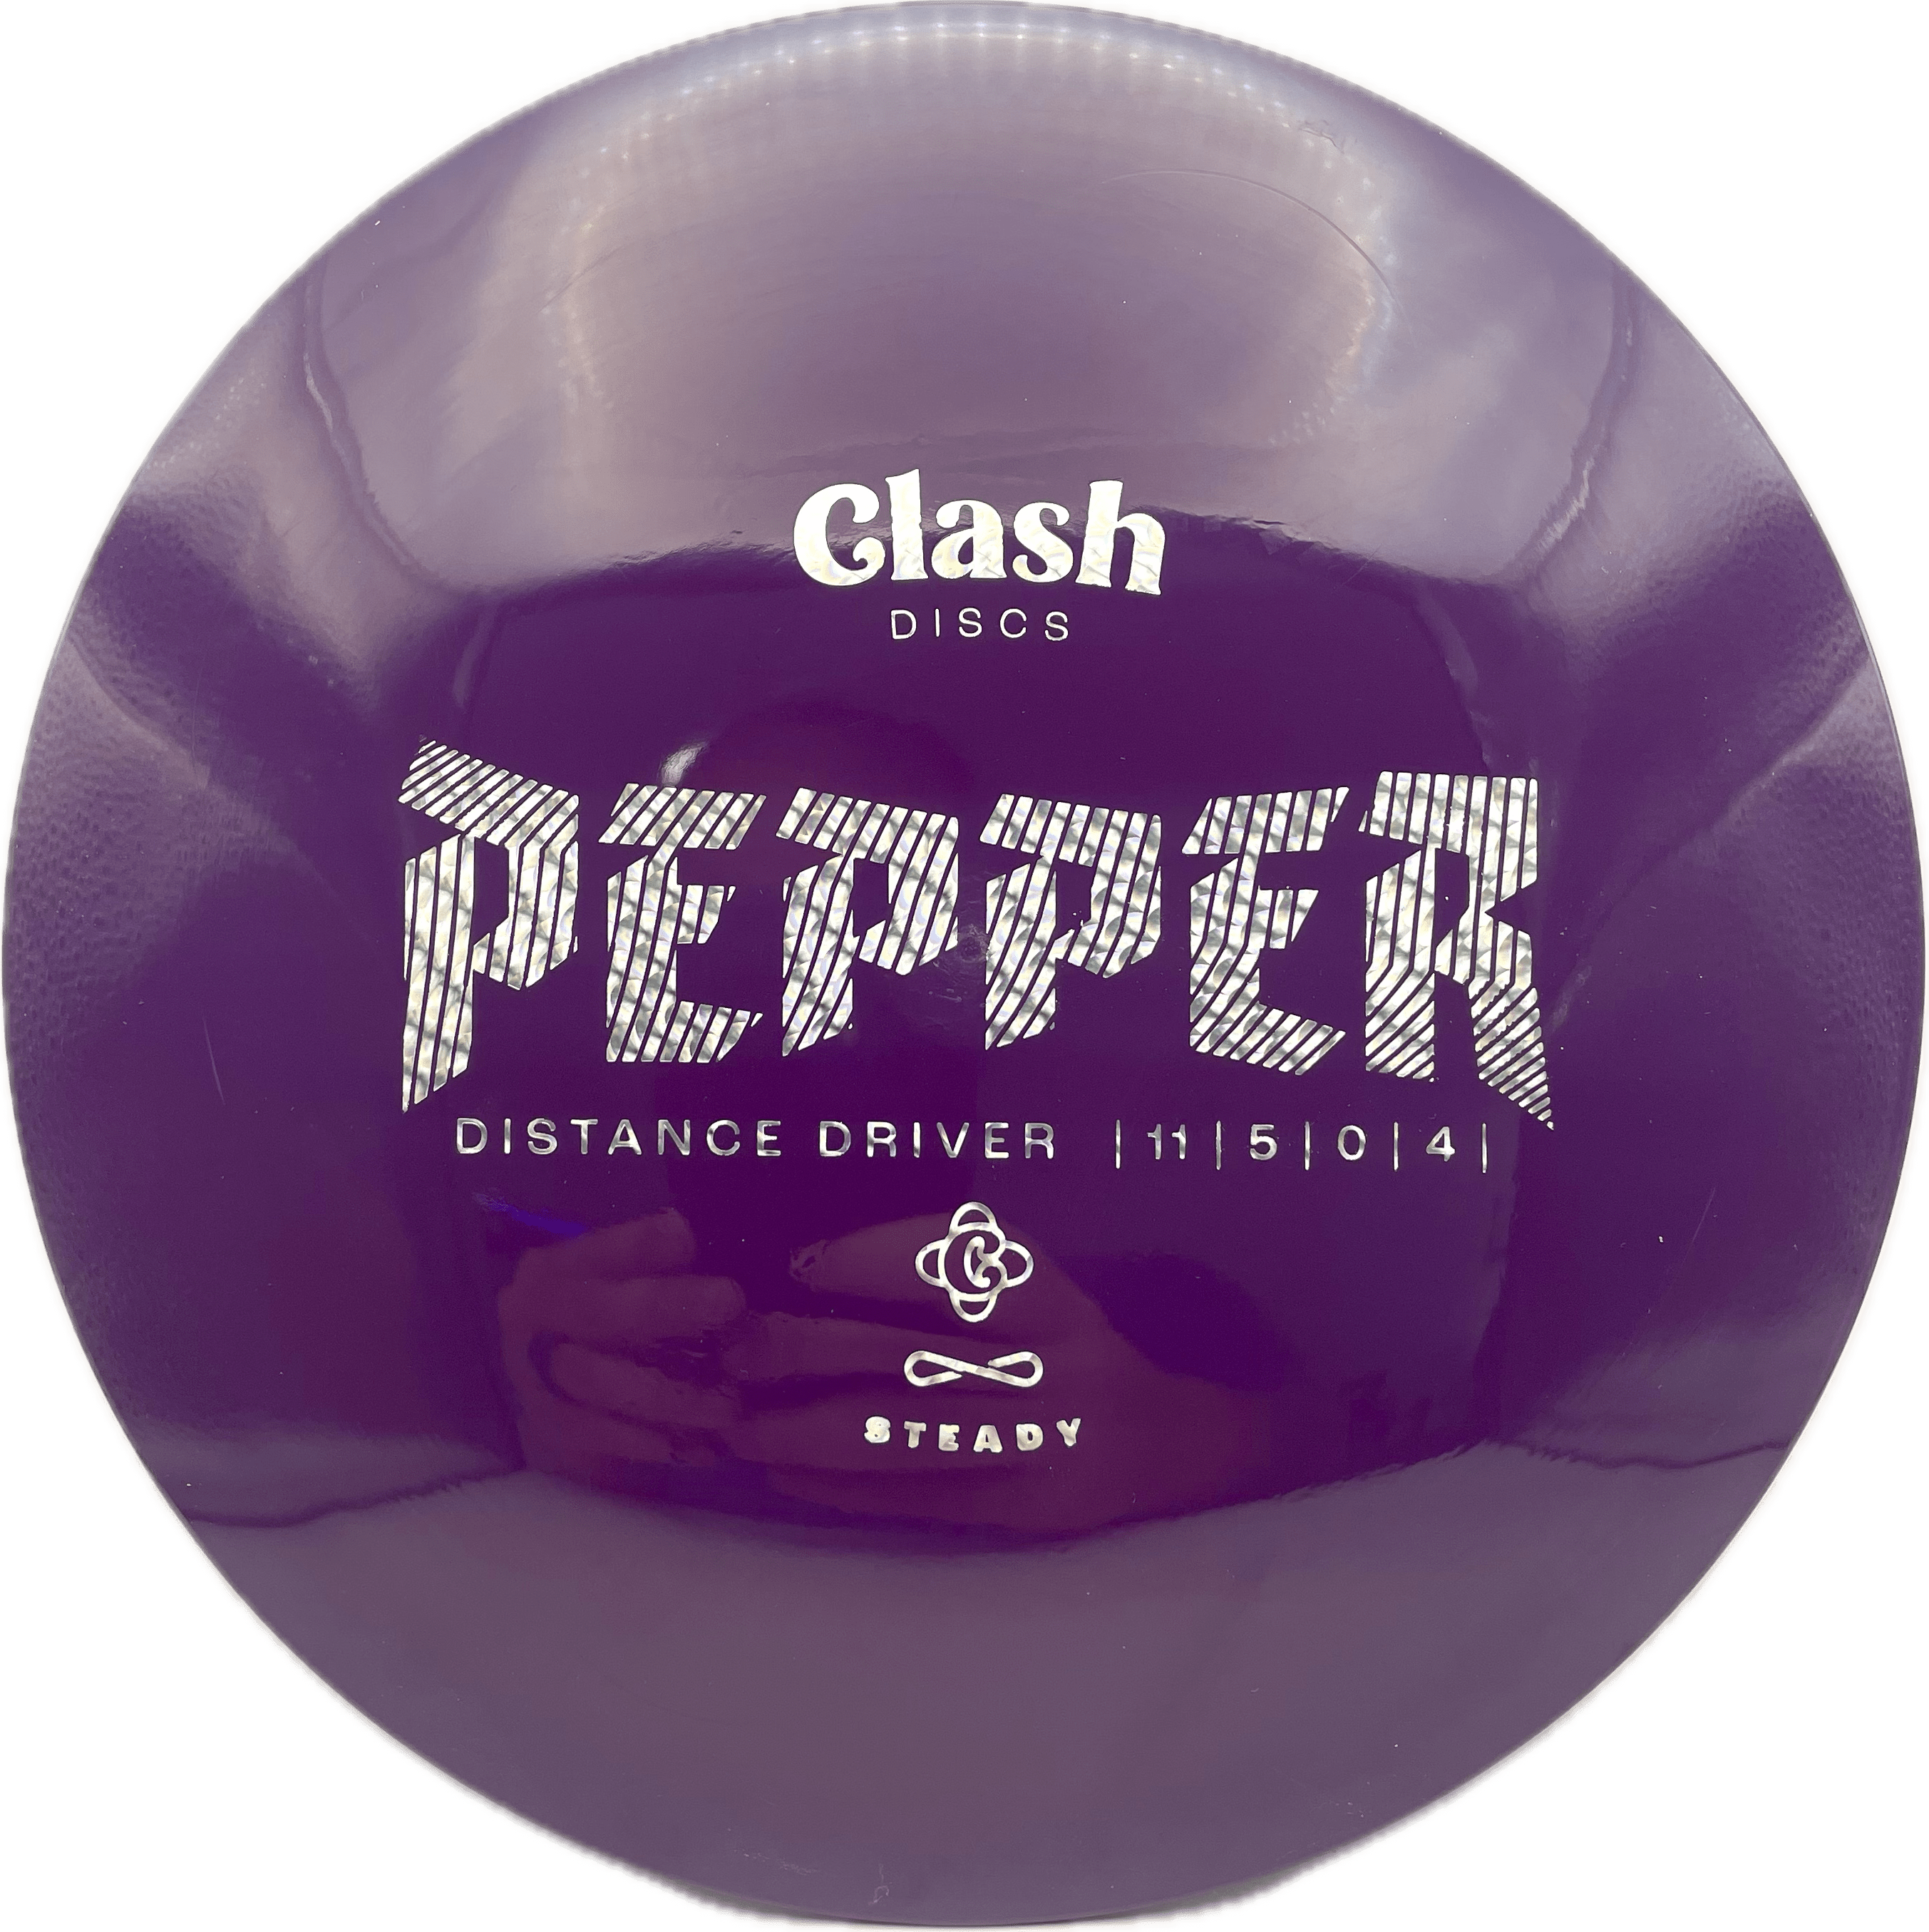 Clash Disc Clash Pepper, Steady, 172-175, Purple, Silver Squares